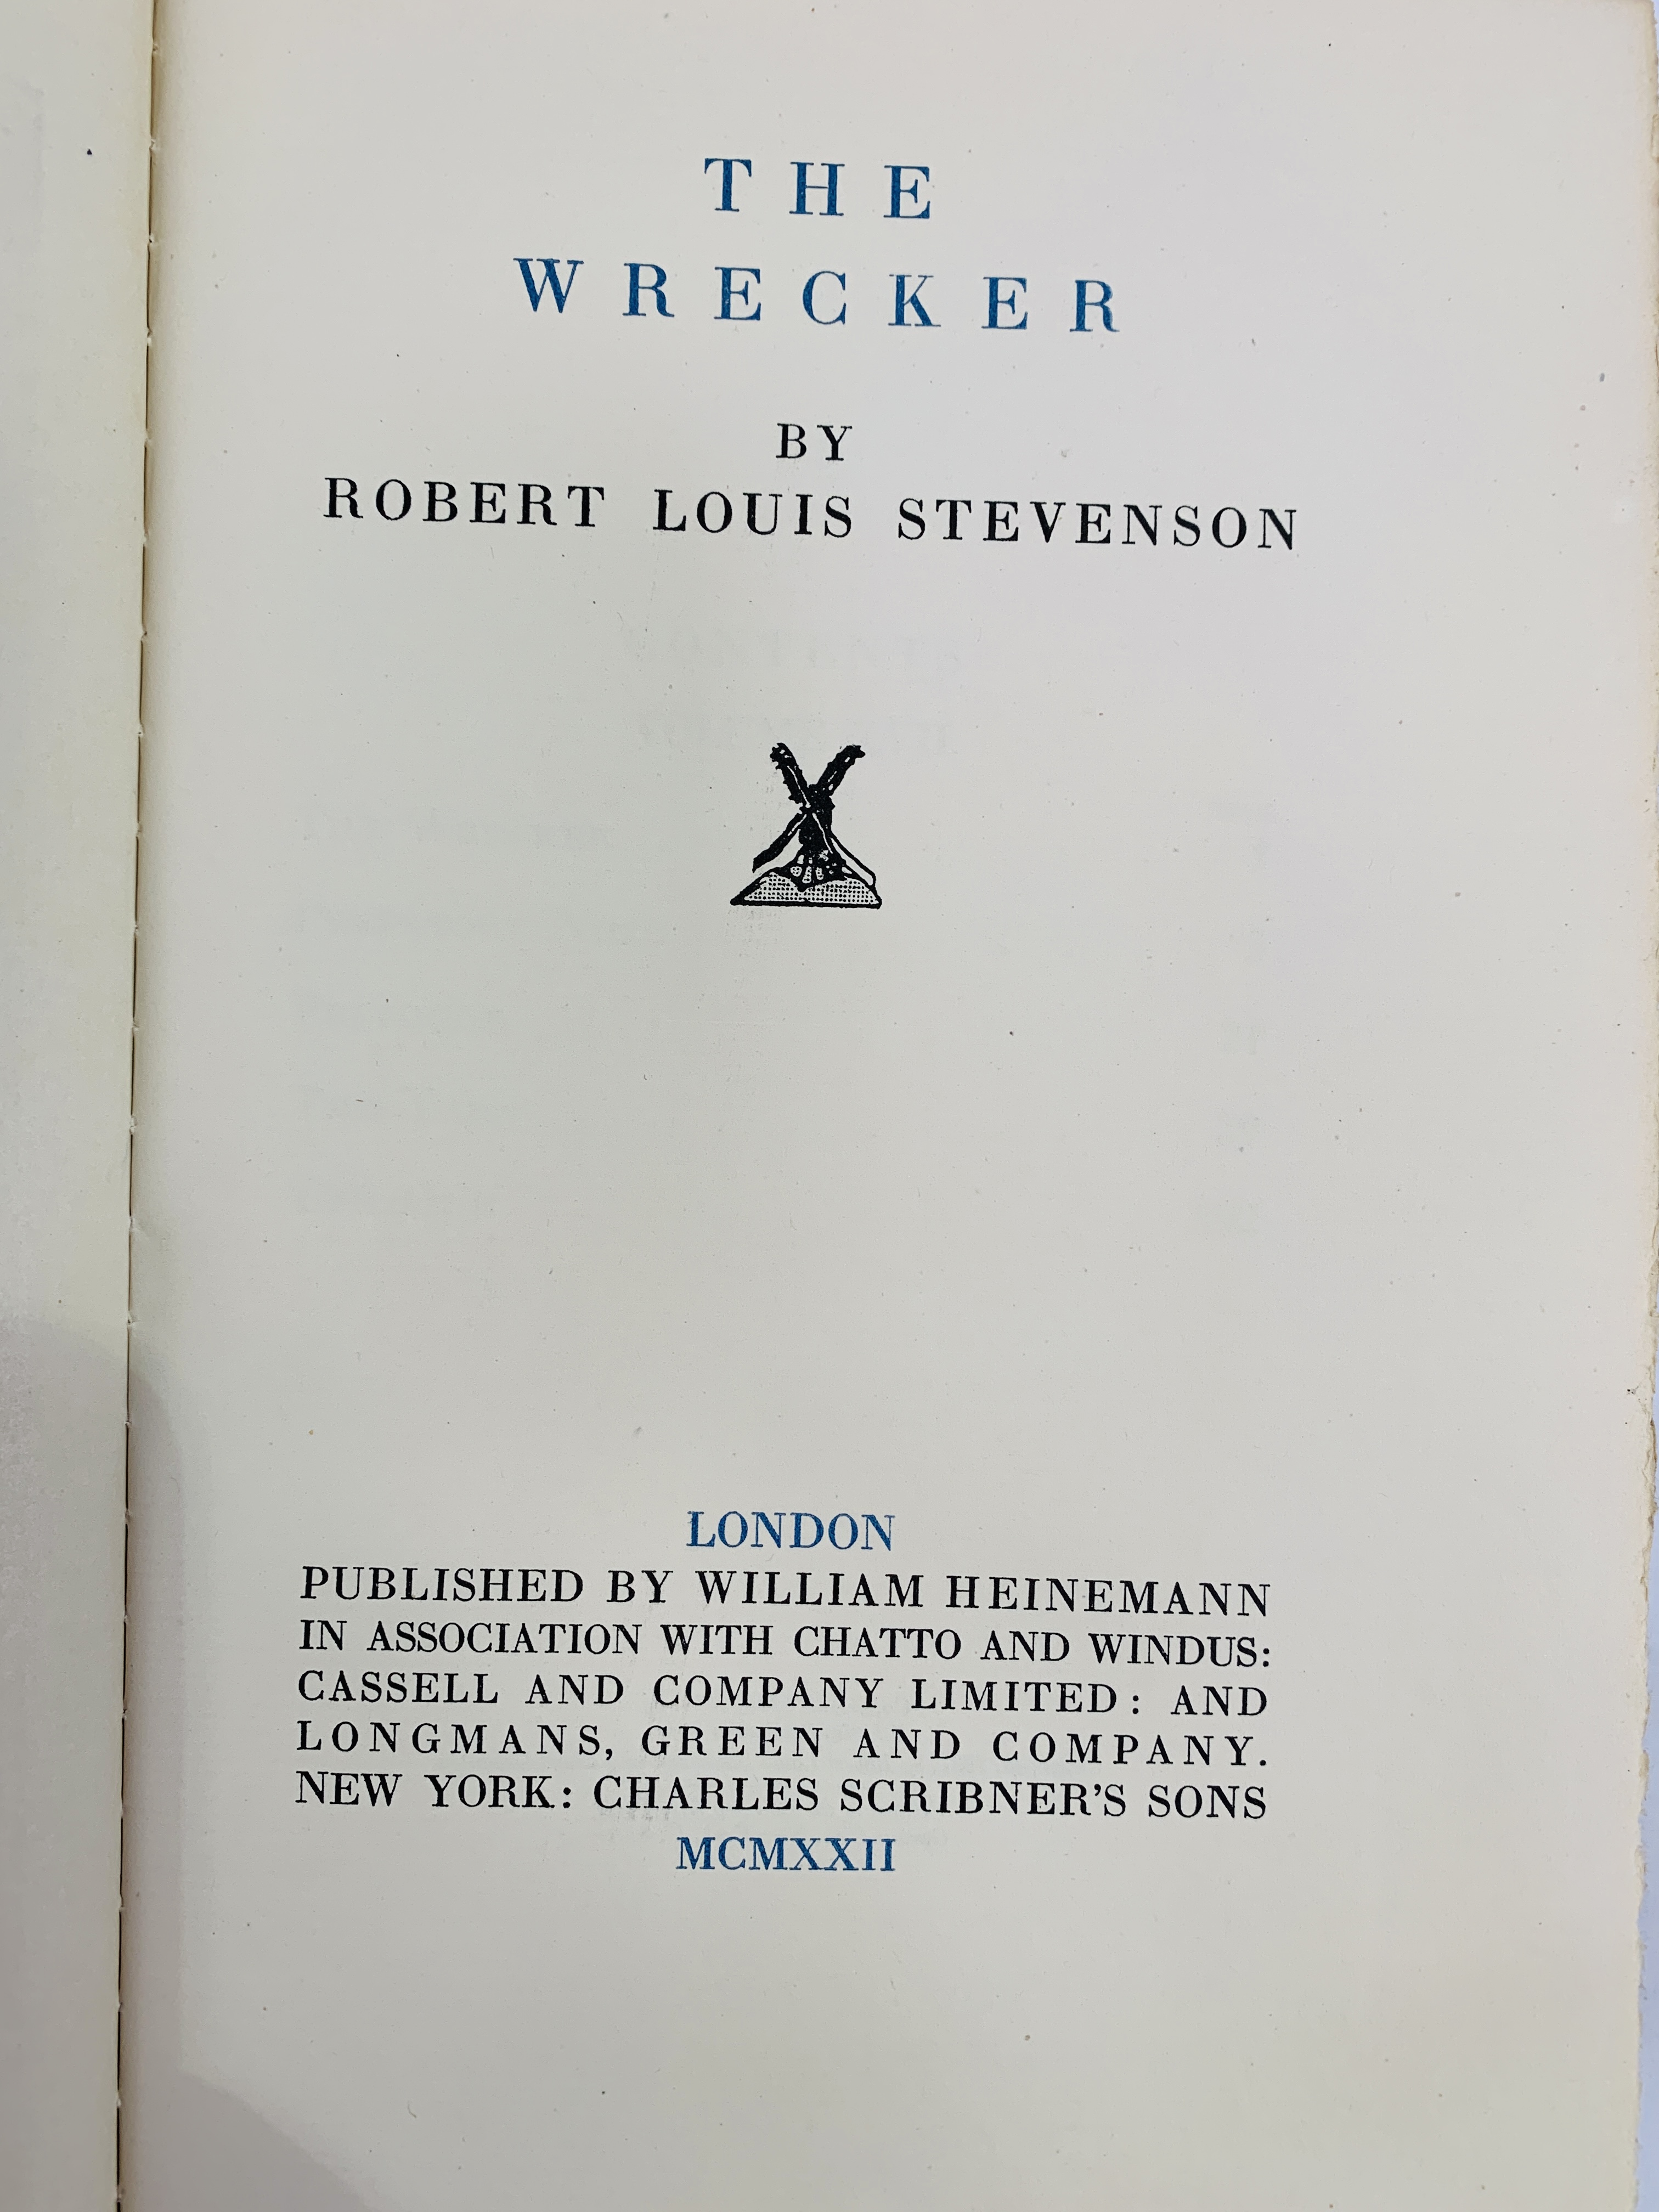 Works of Robert Louis Stevenson, 26 volumes - Image 2 of 4